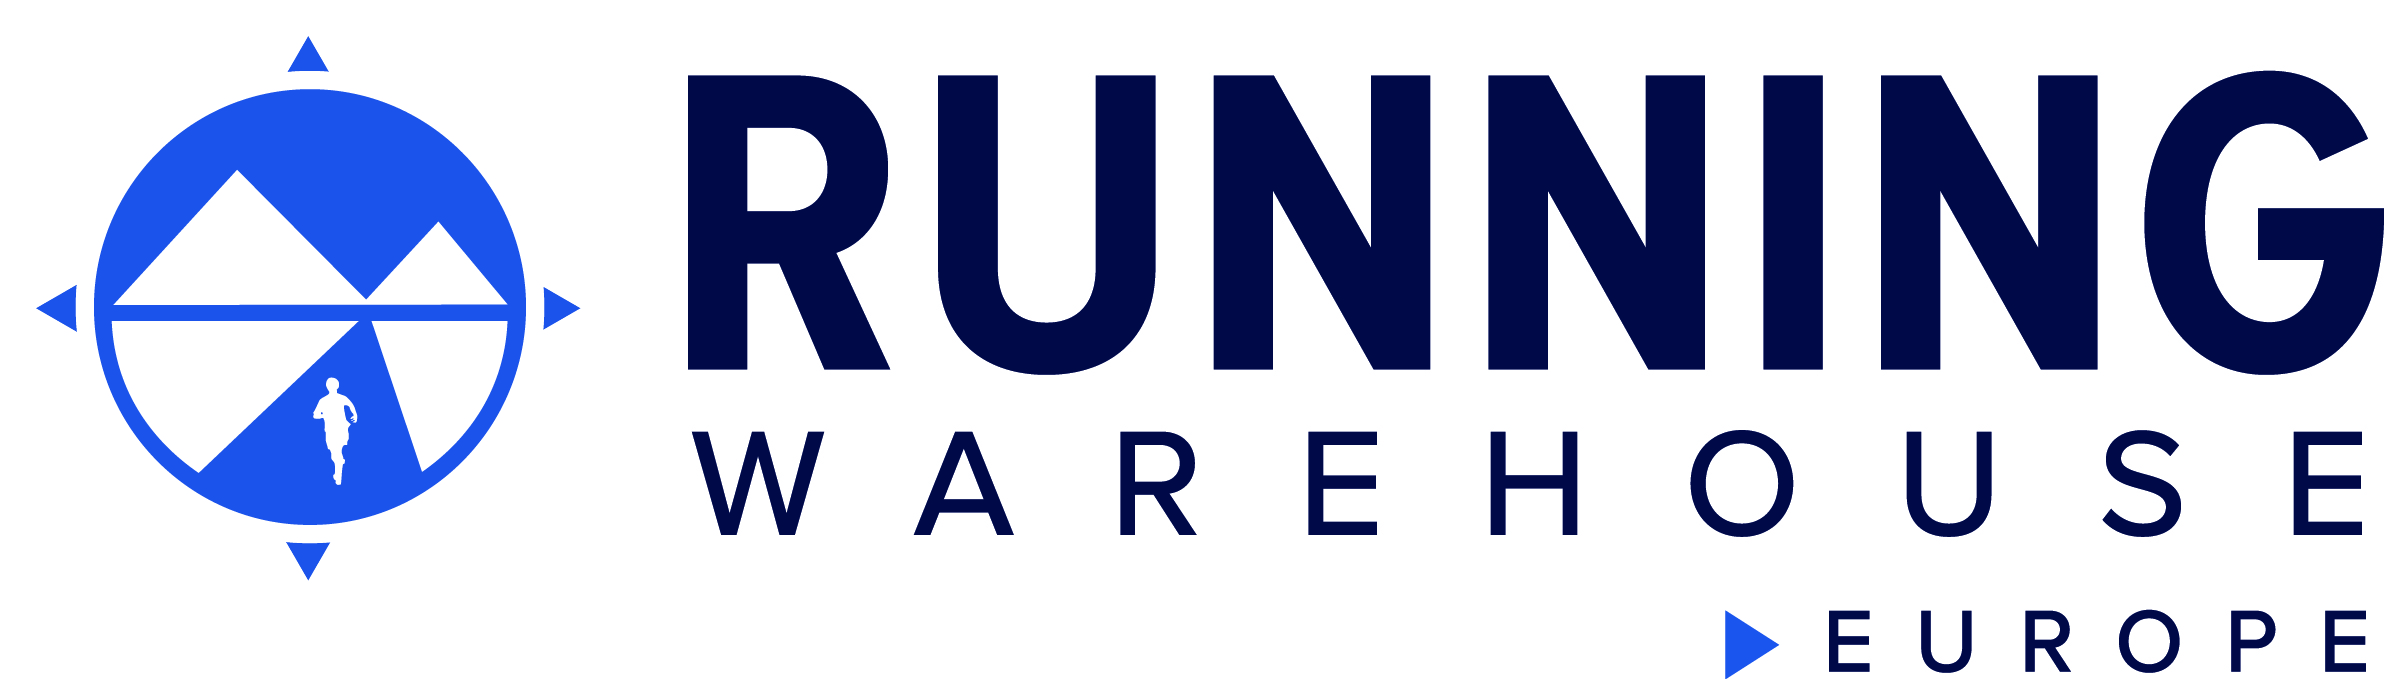 running warehouse logo.jpg